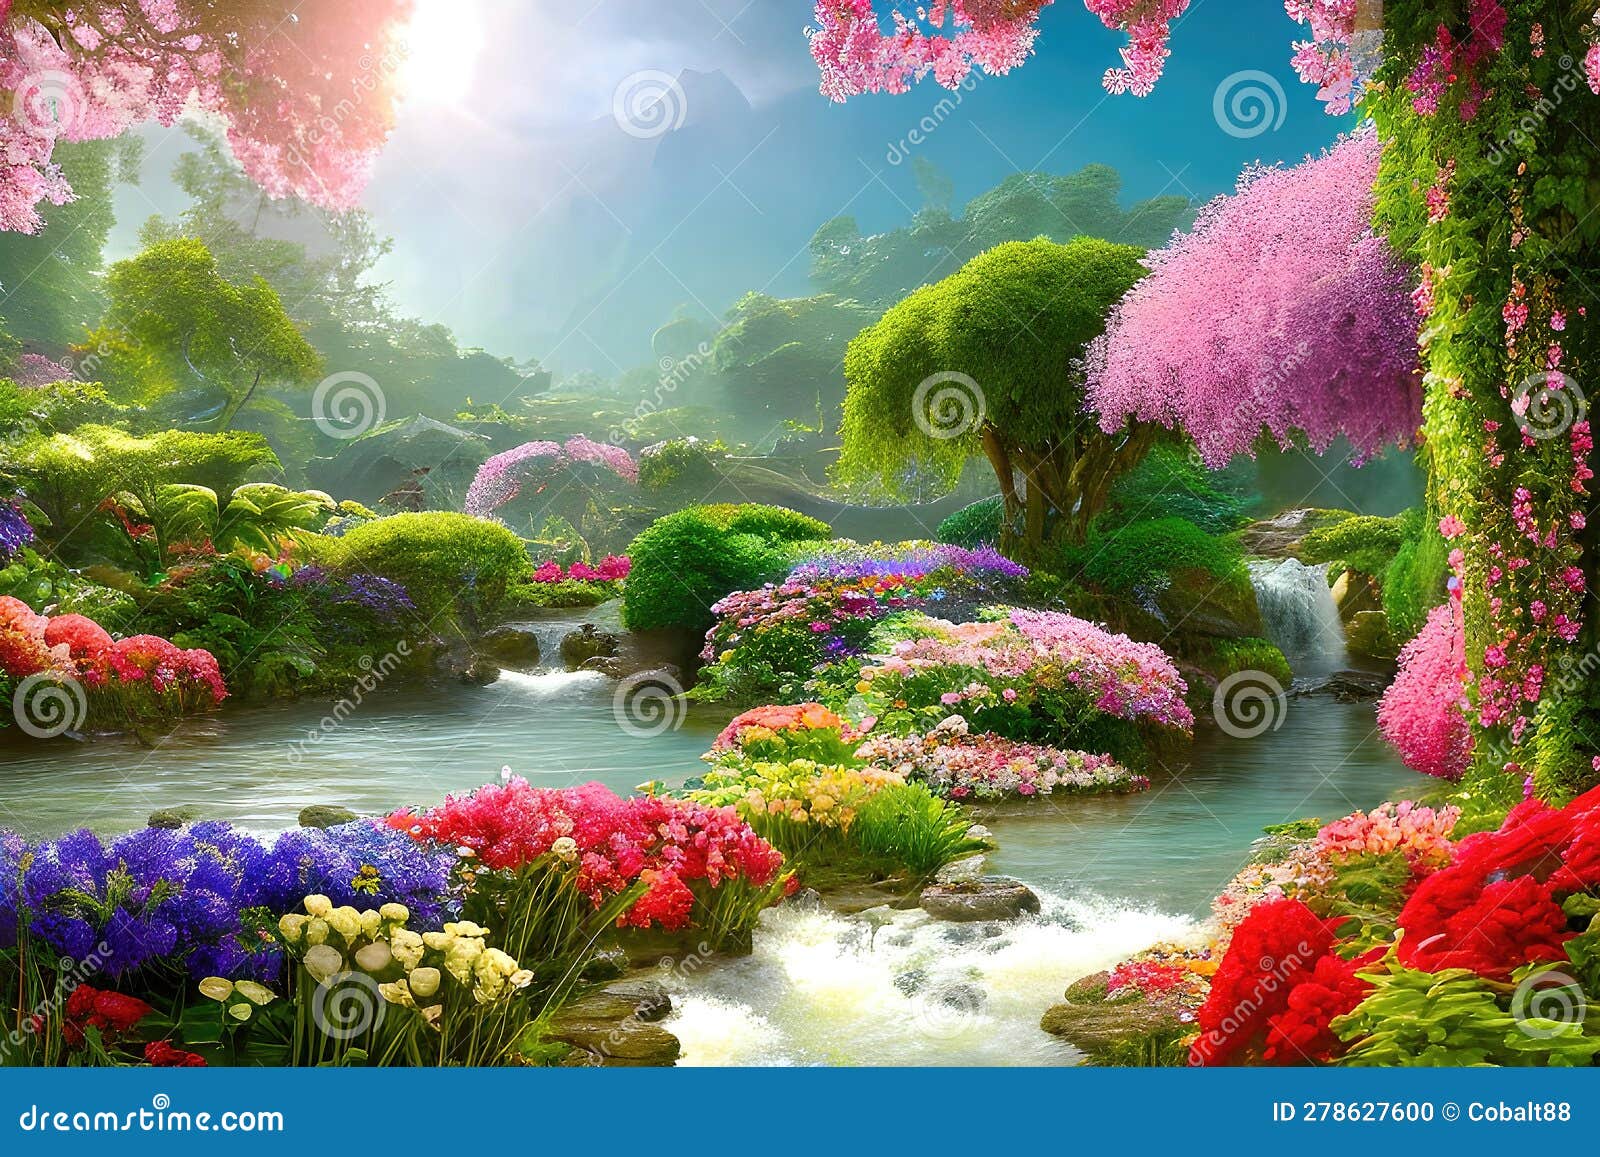 https://thumbs.dreamstime.com/z/paradise-garden-full-flowers-beautiful-idyllic-background-many-flowers-eden-d-illustration-fairytale-colors-278627600.jpg